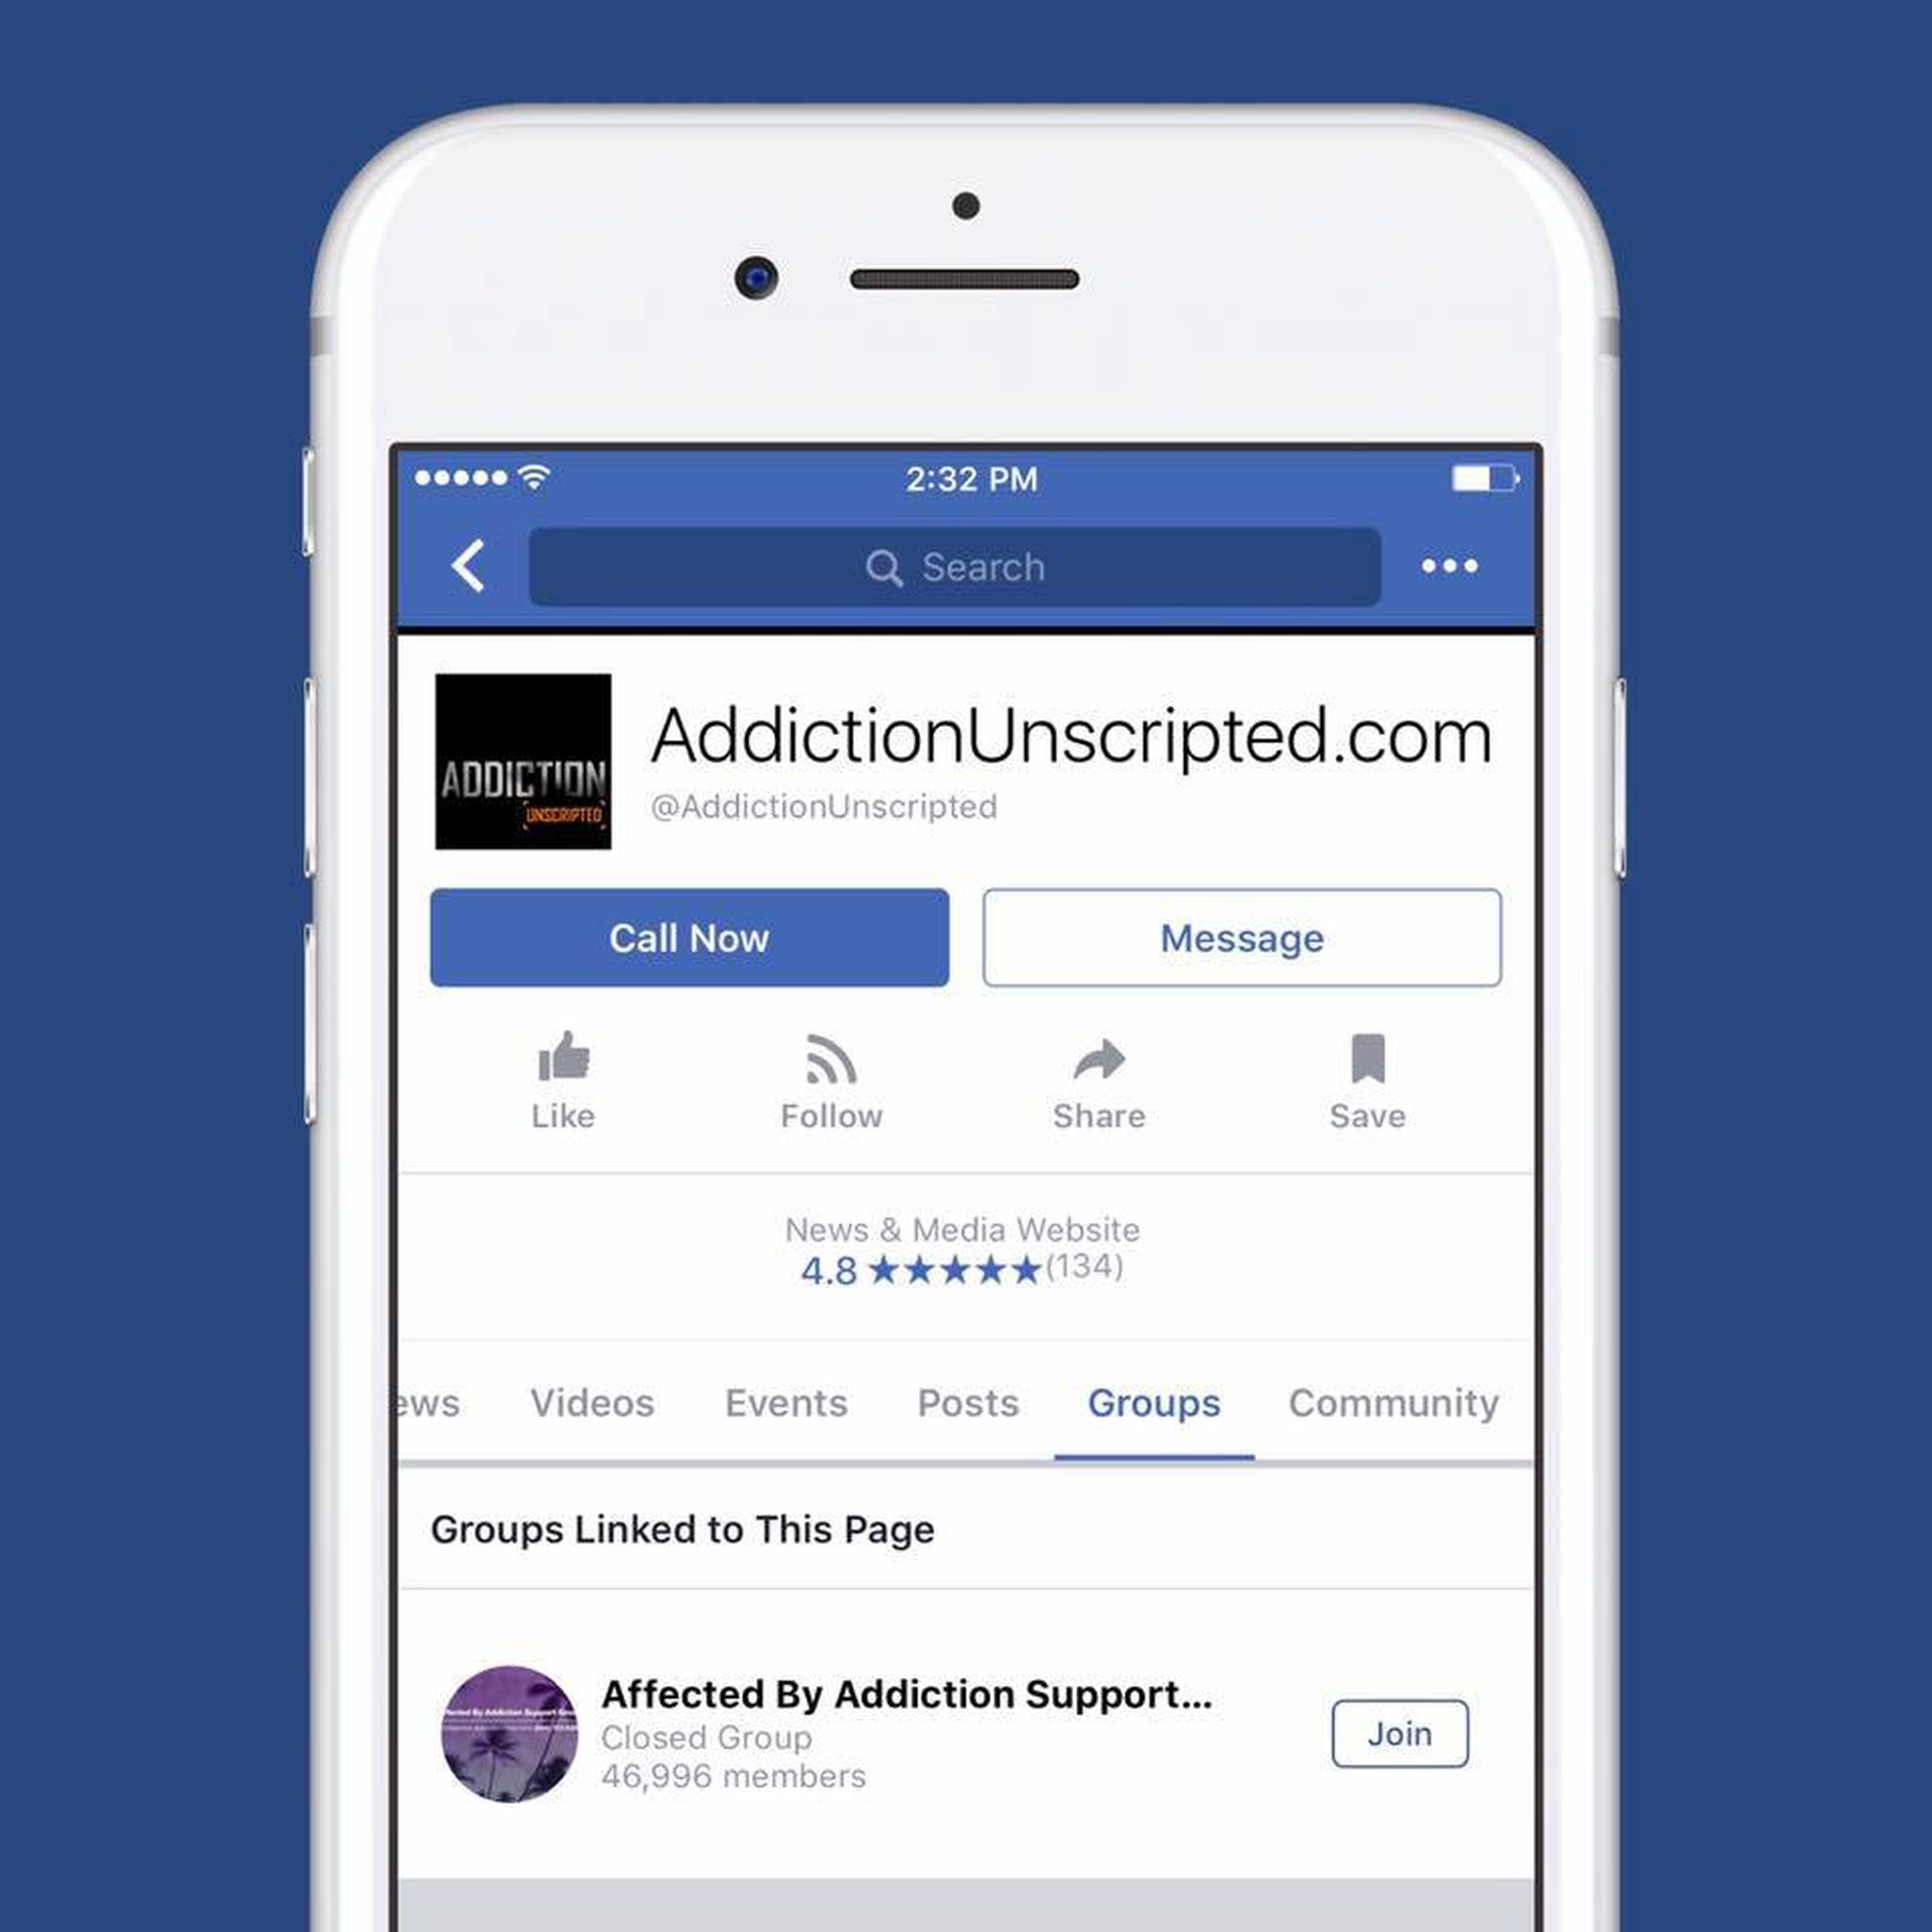 The AddictionUnscripted.com Facebook page